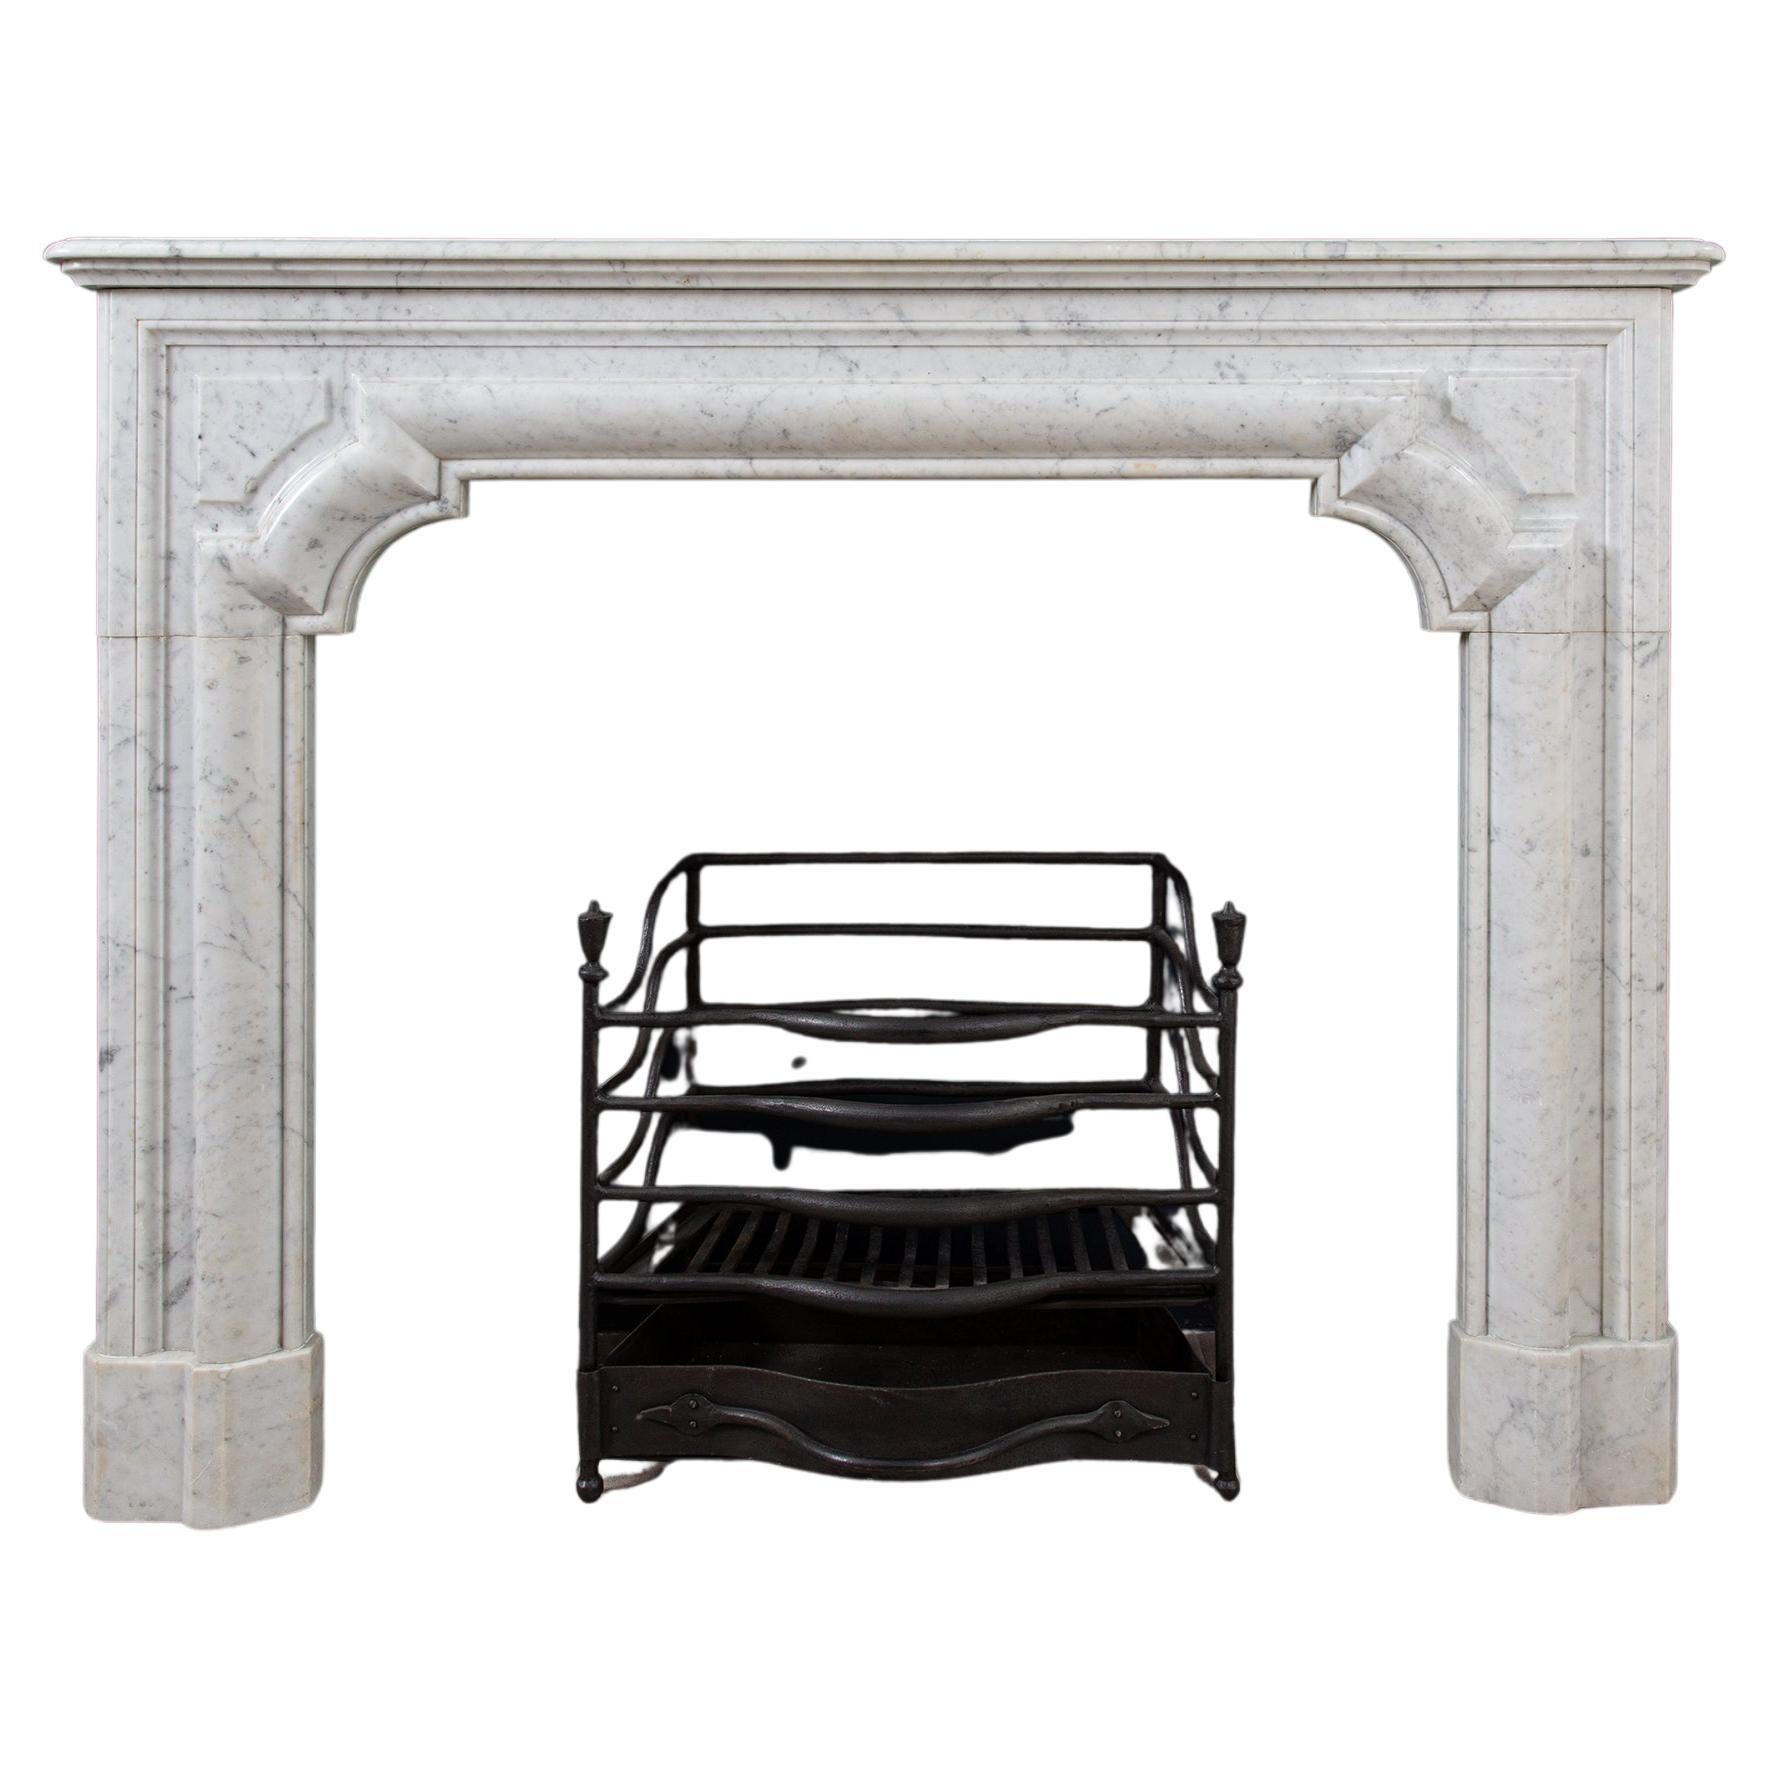 Antique Carrara Marble Lousie XIV Style Bolection Fireplace Surround